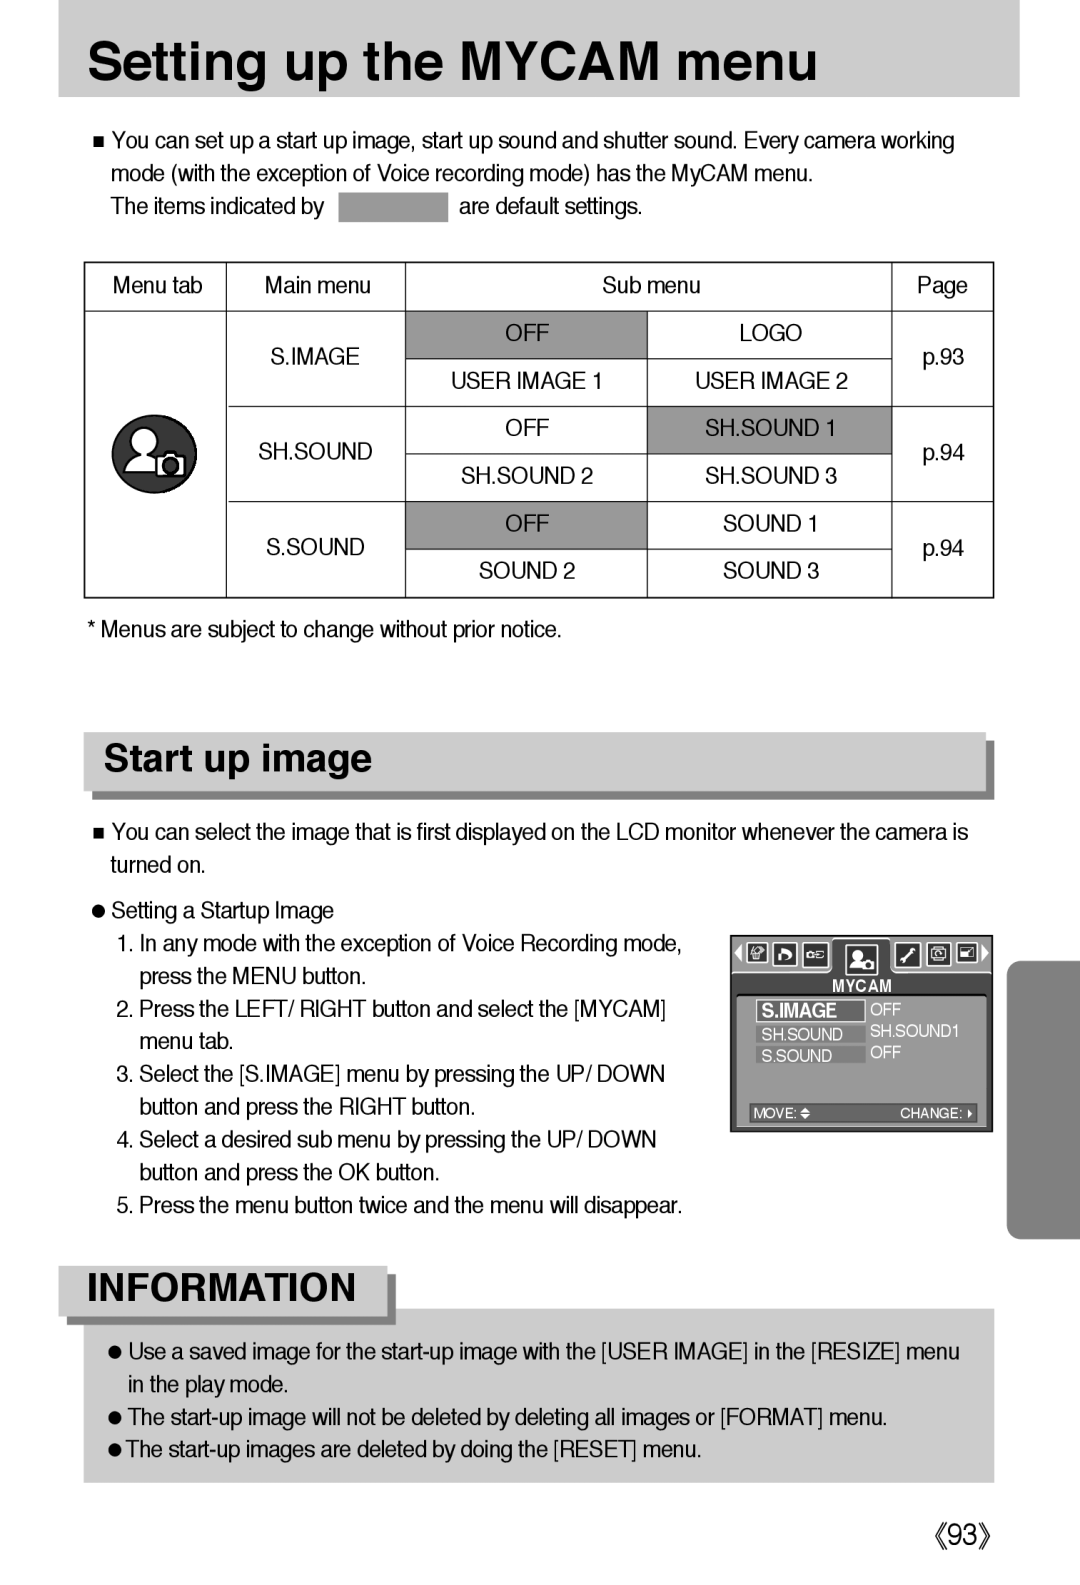 Samsung L50 user manual Setting up the MYCAM menu, Start up image, 《93》, Information 